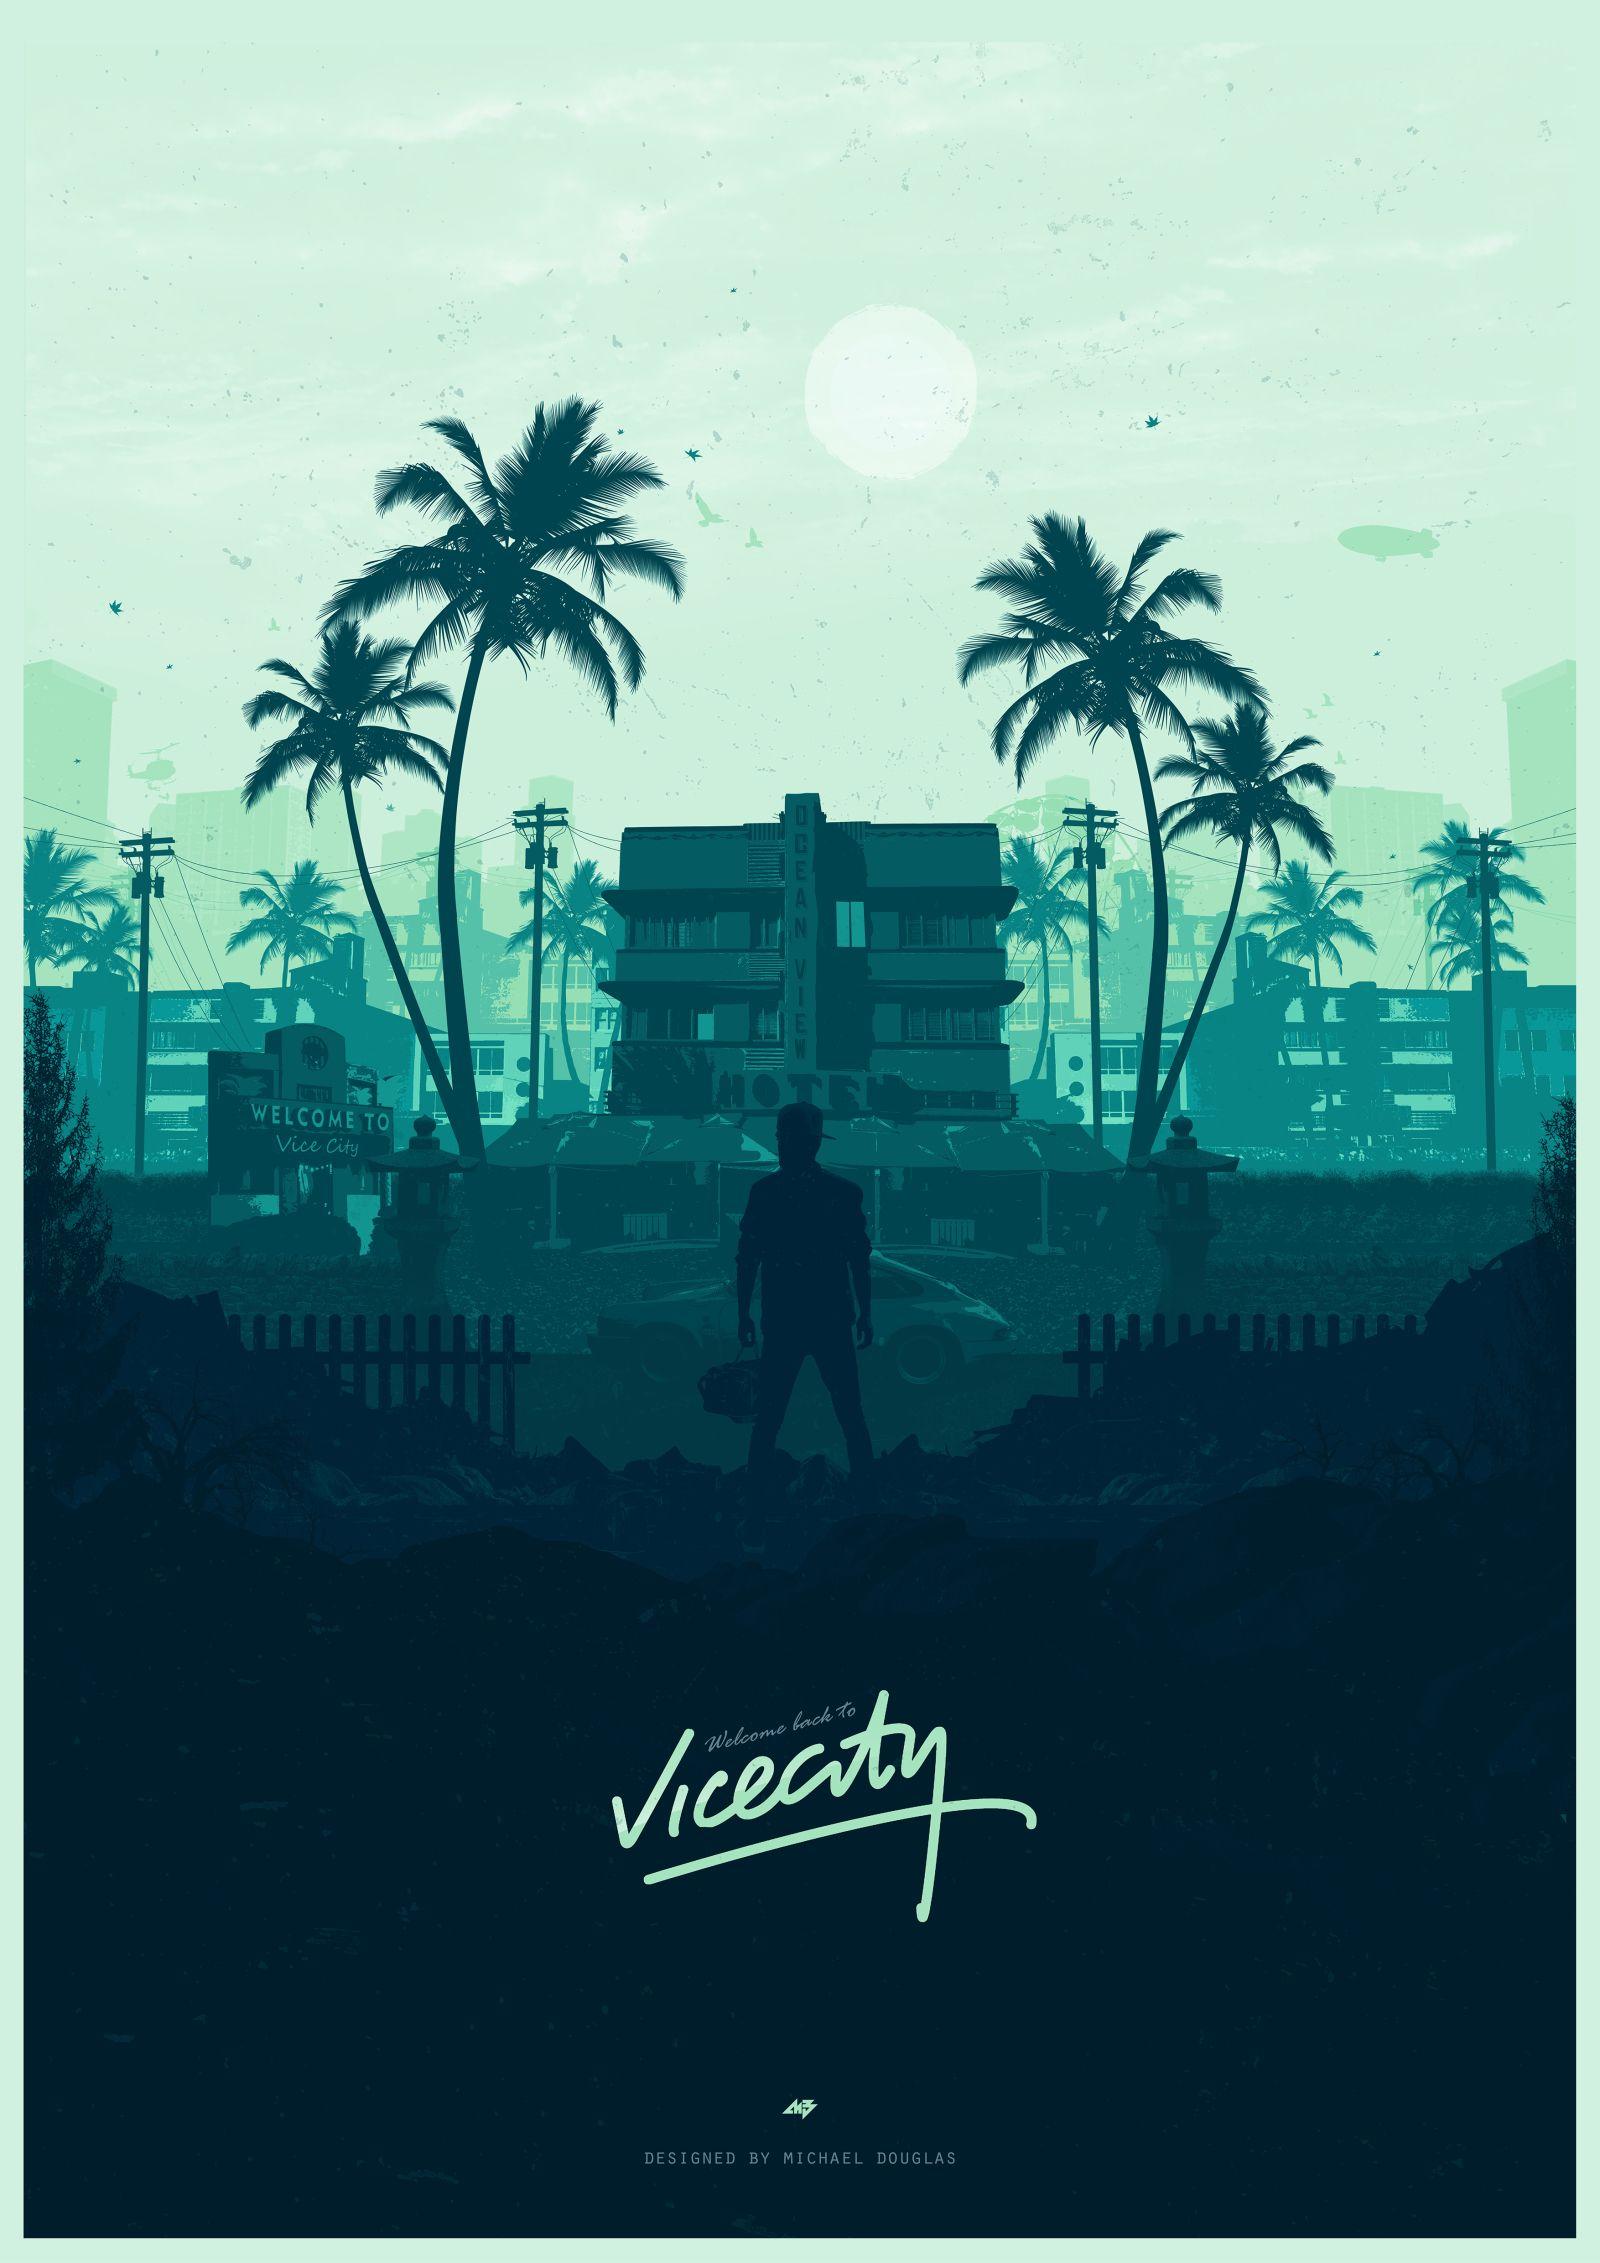 Welcome back to Vice City. City wallpaper, Miami wallpaper, Gta